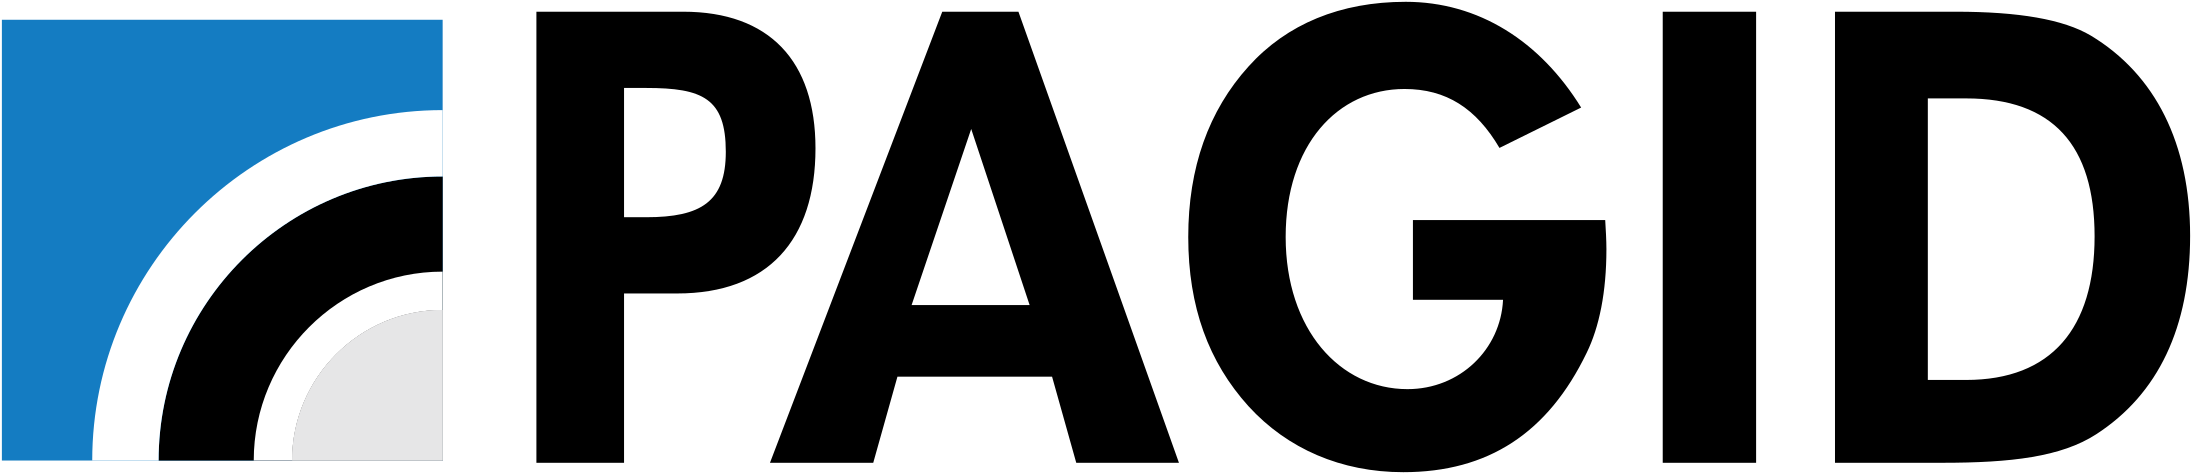 Pagid Bremsbelage Logo Png Transparent - Hella Pagid Logo (2400x2400), Png Download